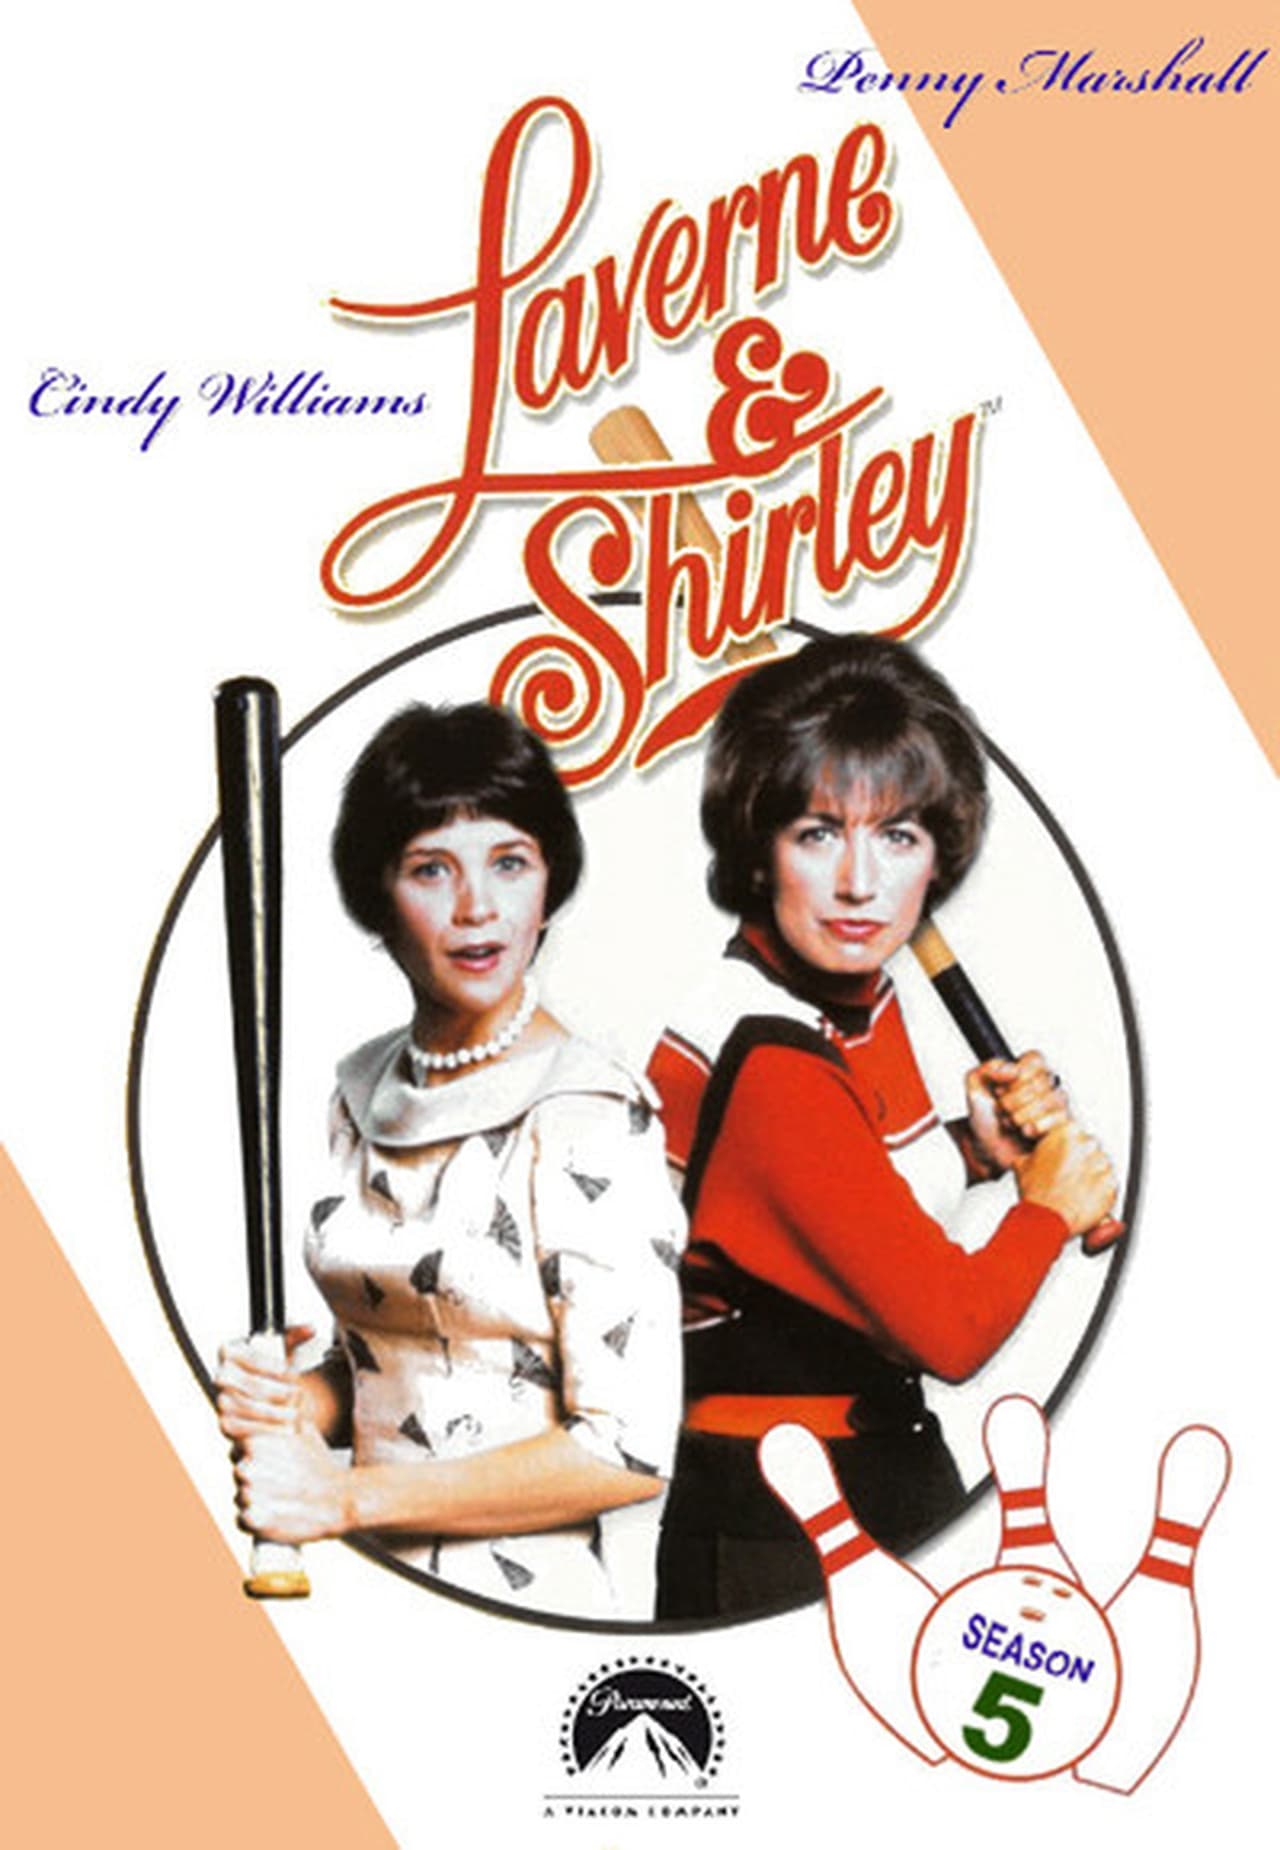 Laverne & Shirley Season 5